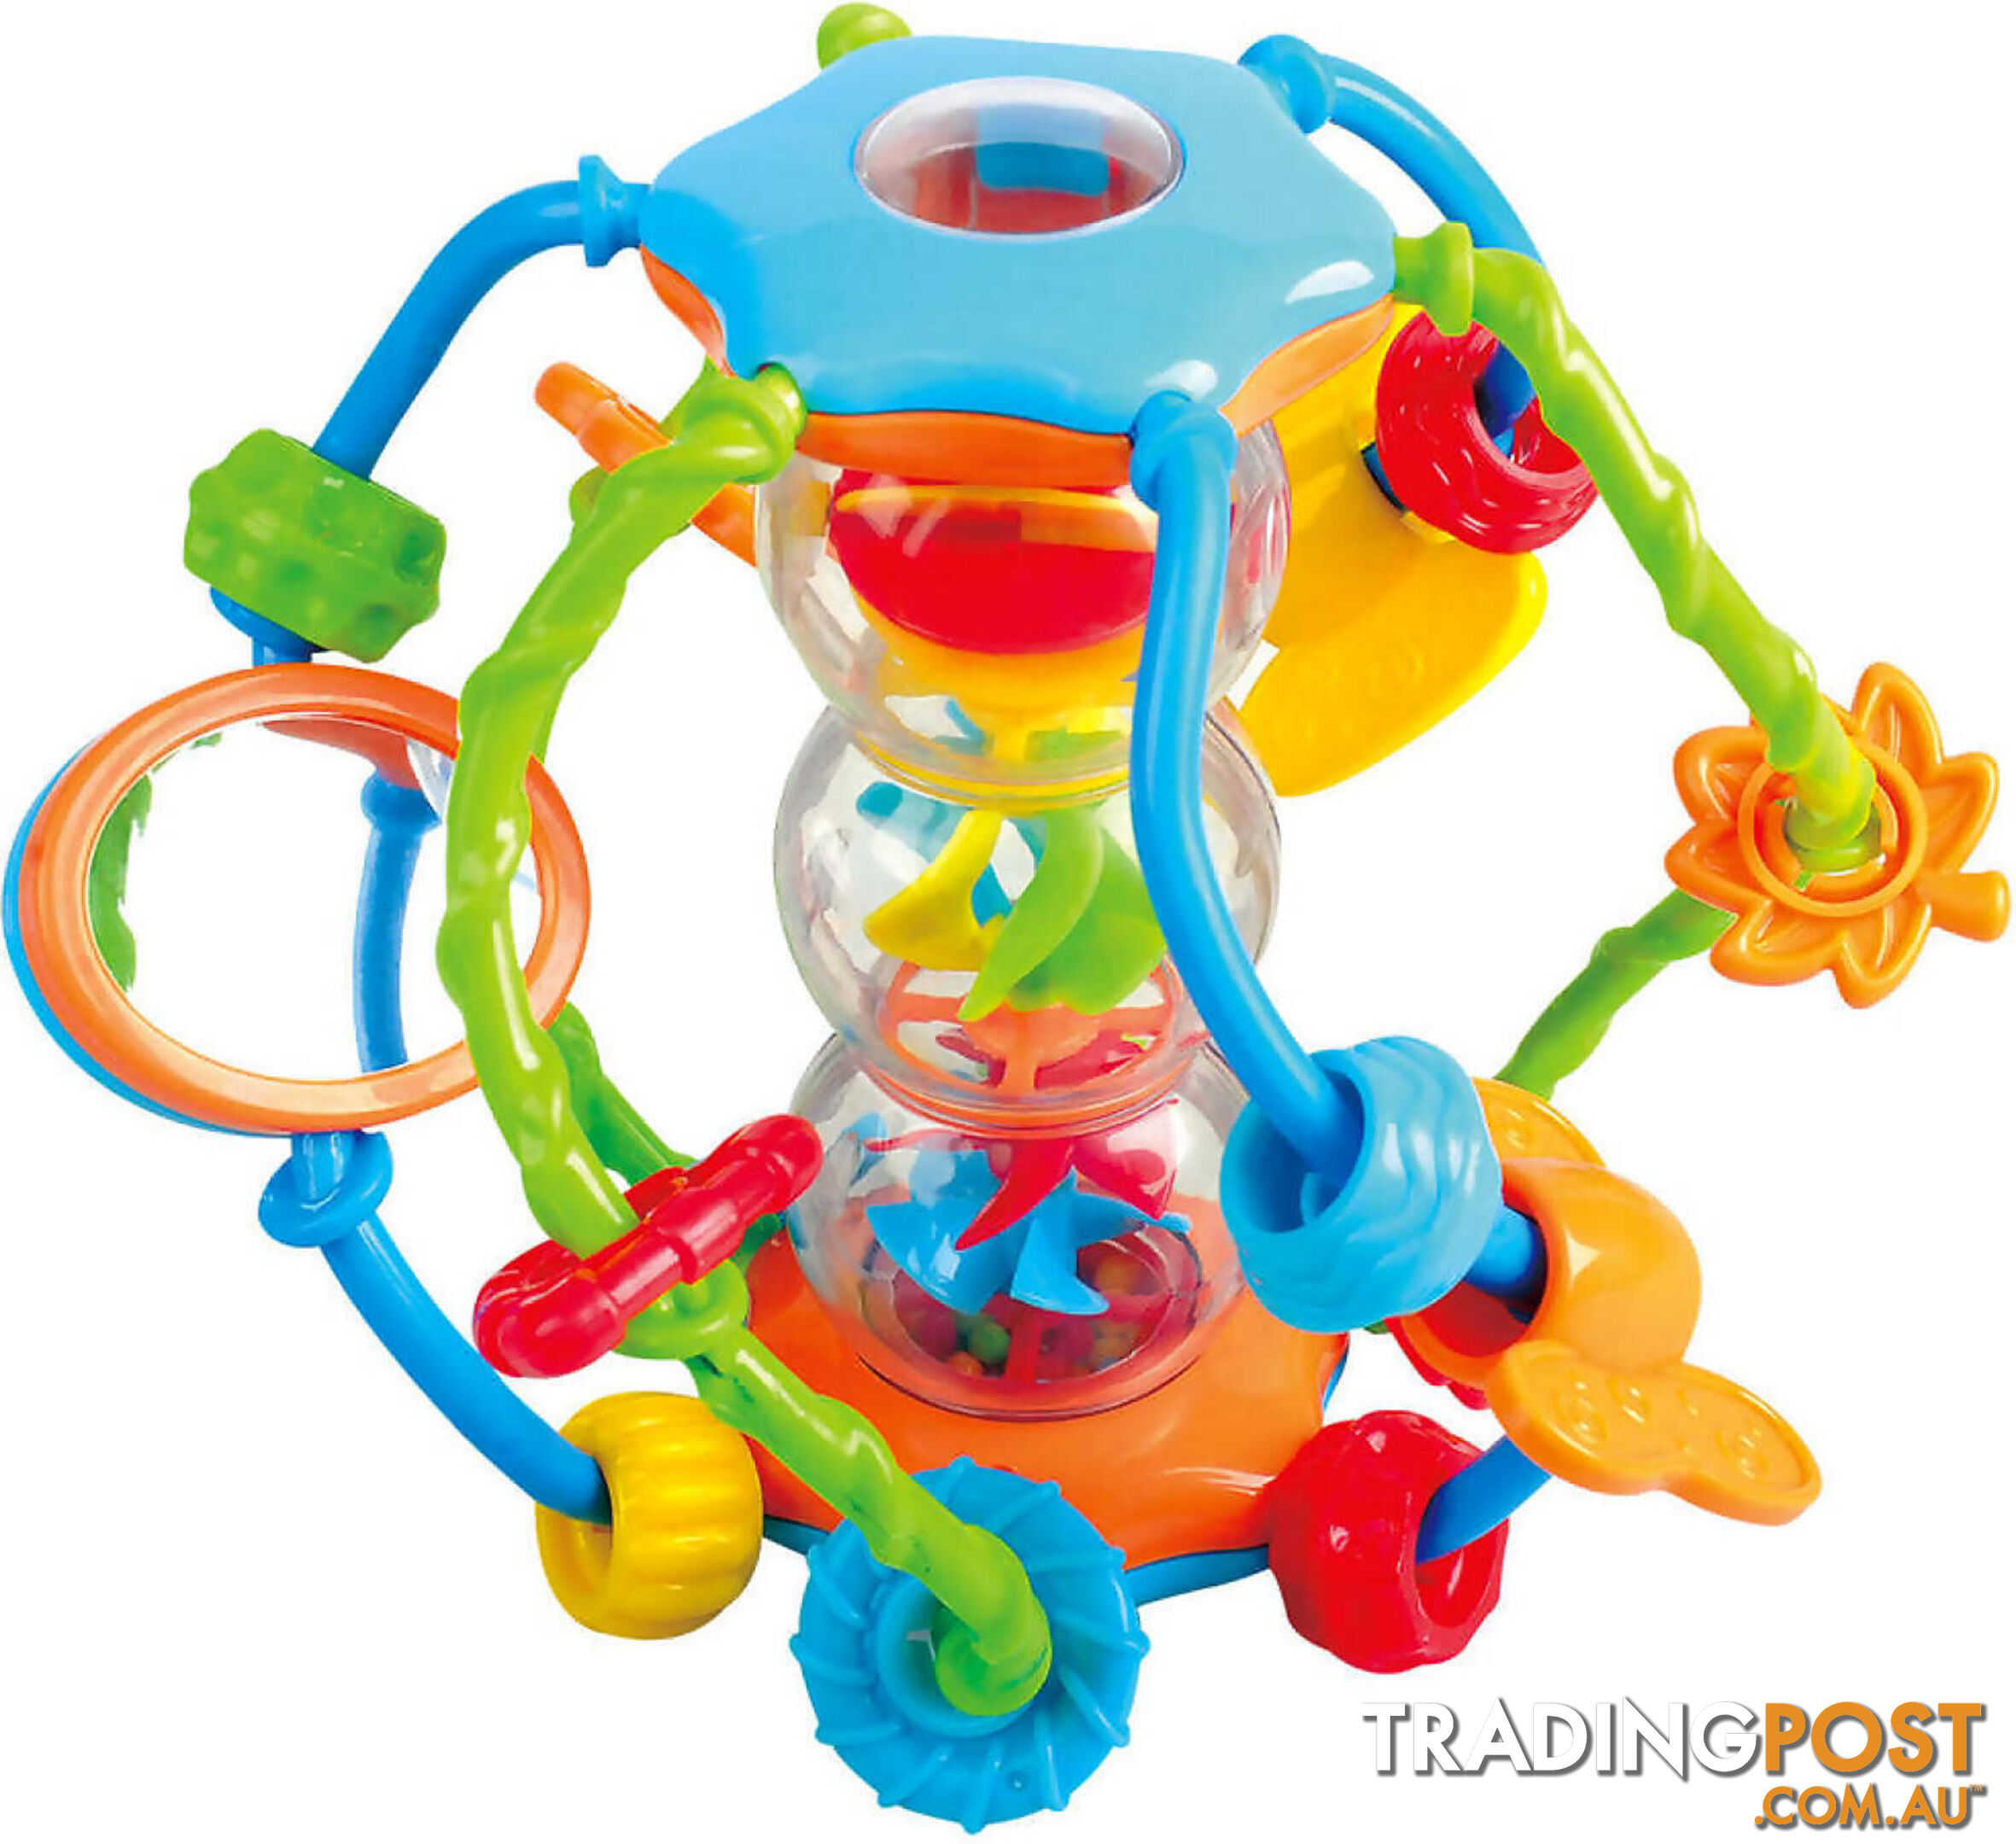 Playgo Toys Ent. Ltd. - Little Hands Activity Ball - Art65984 - 4892401015969